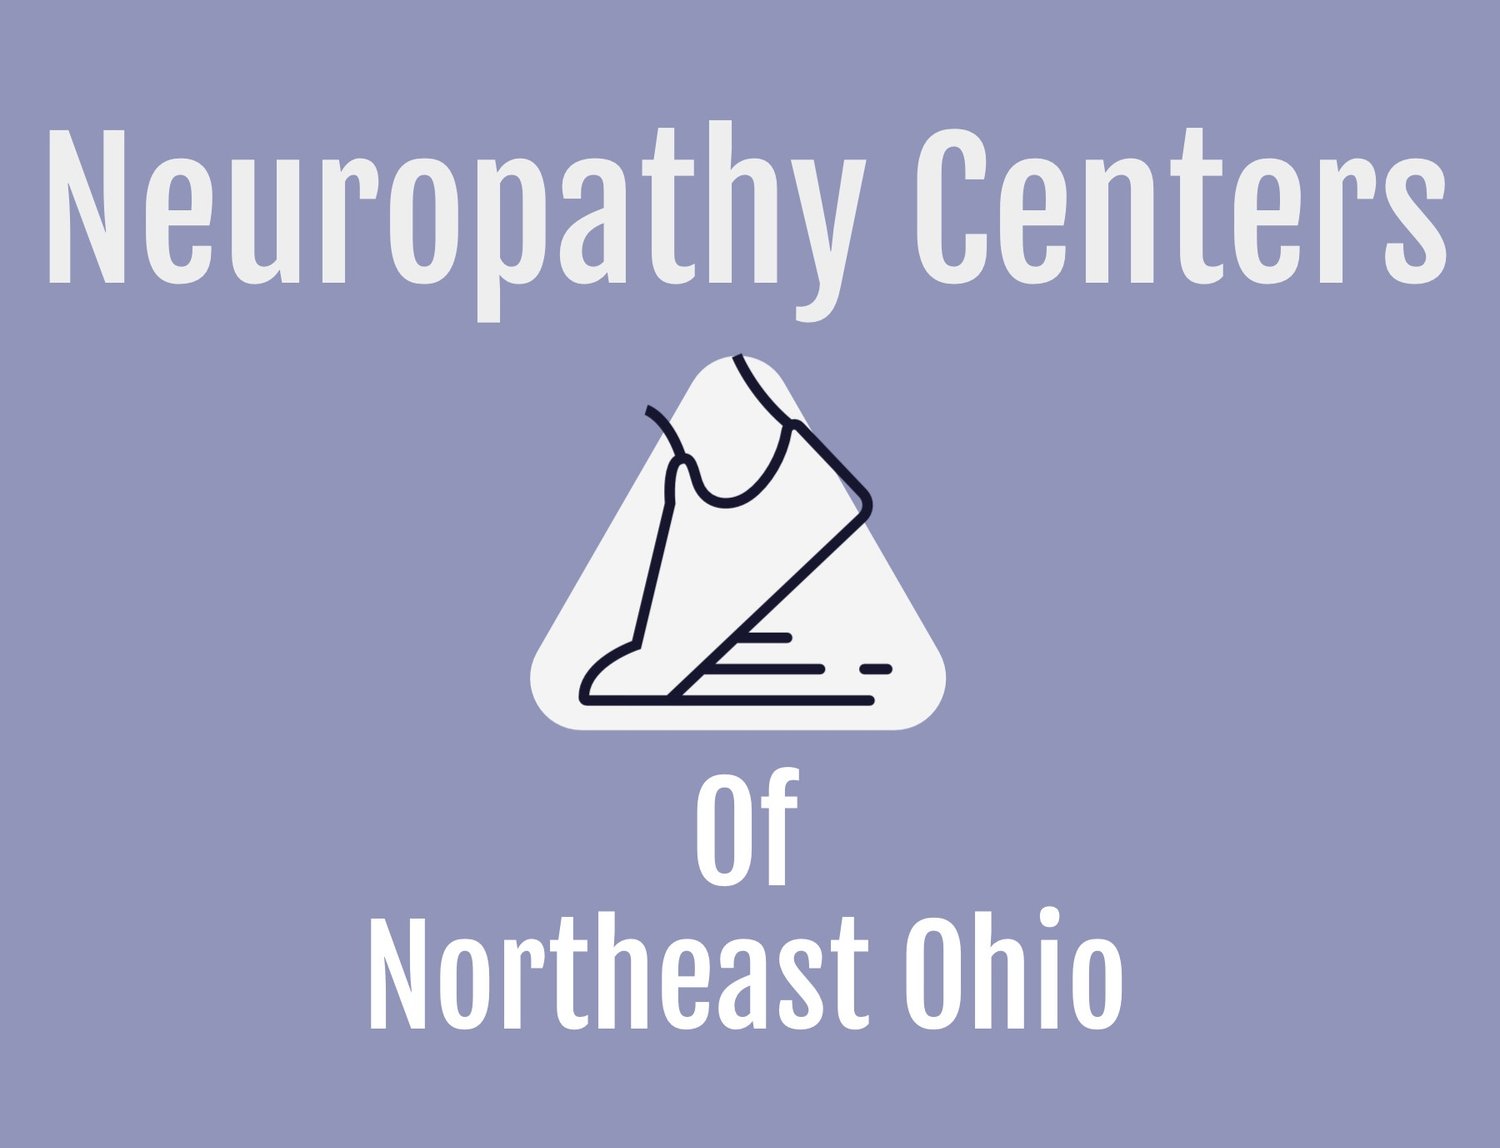 Neuropathy Centers of Northeast Ohio